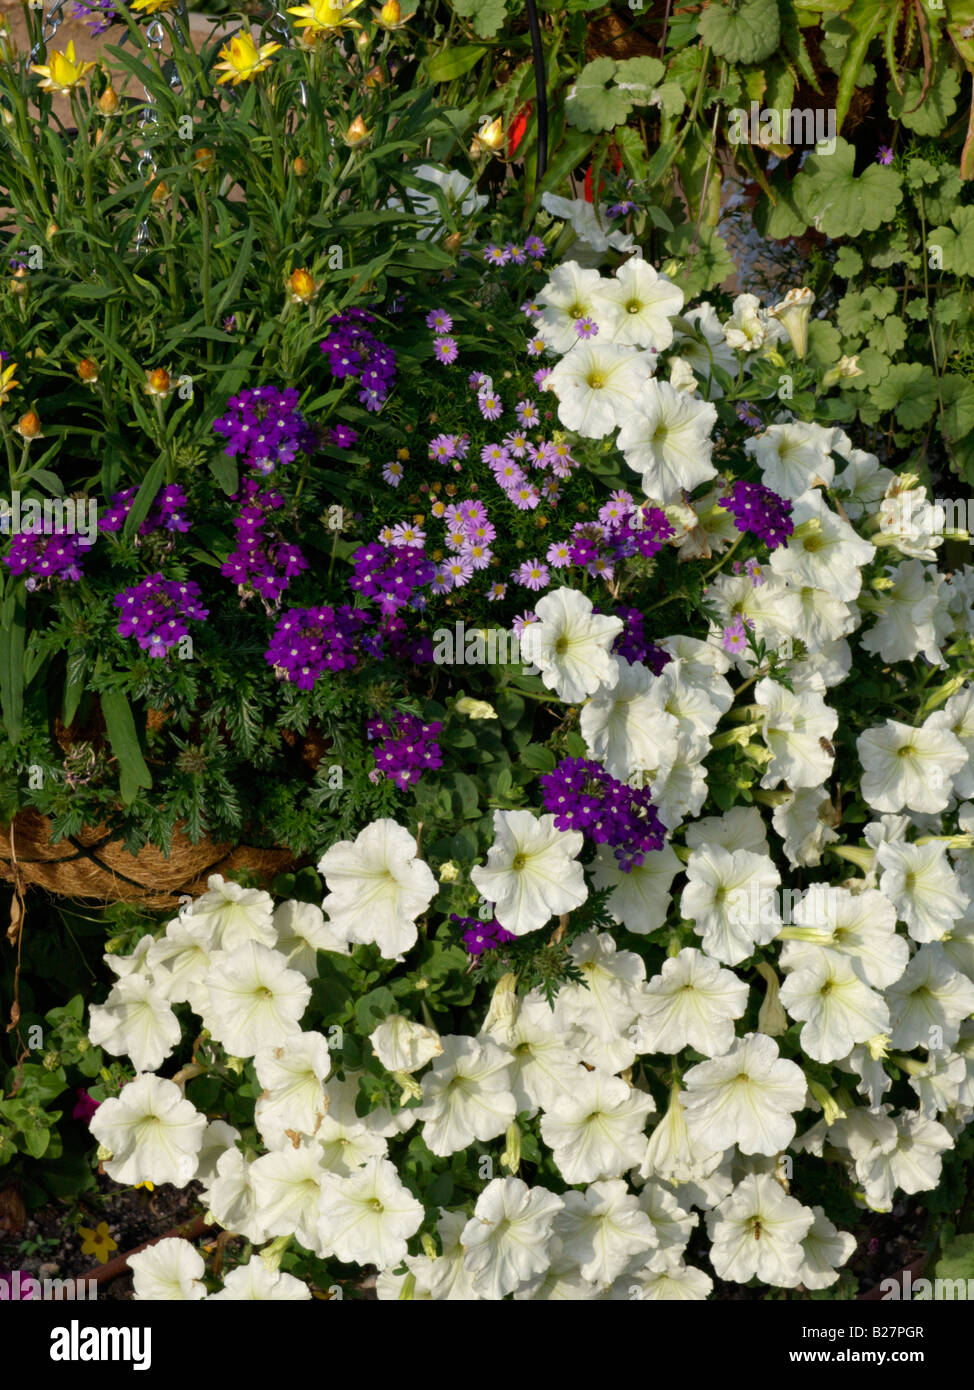 Vervains (Verbena), cut-leaved daisy (Brachyscome) and petunias (Petunia) Stock Photo